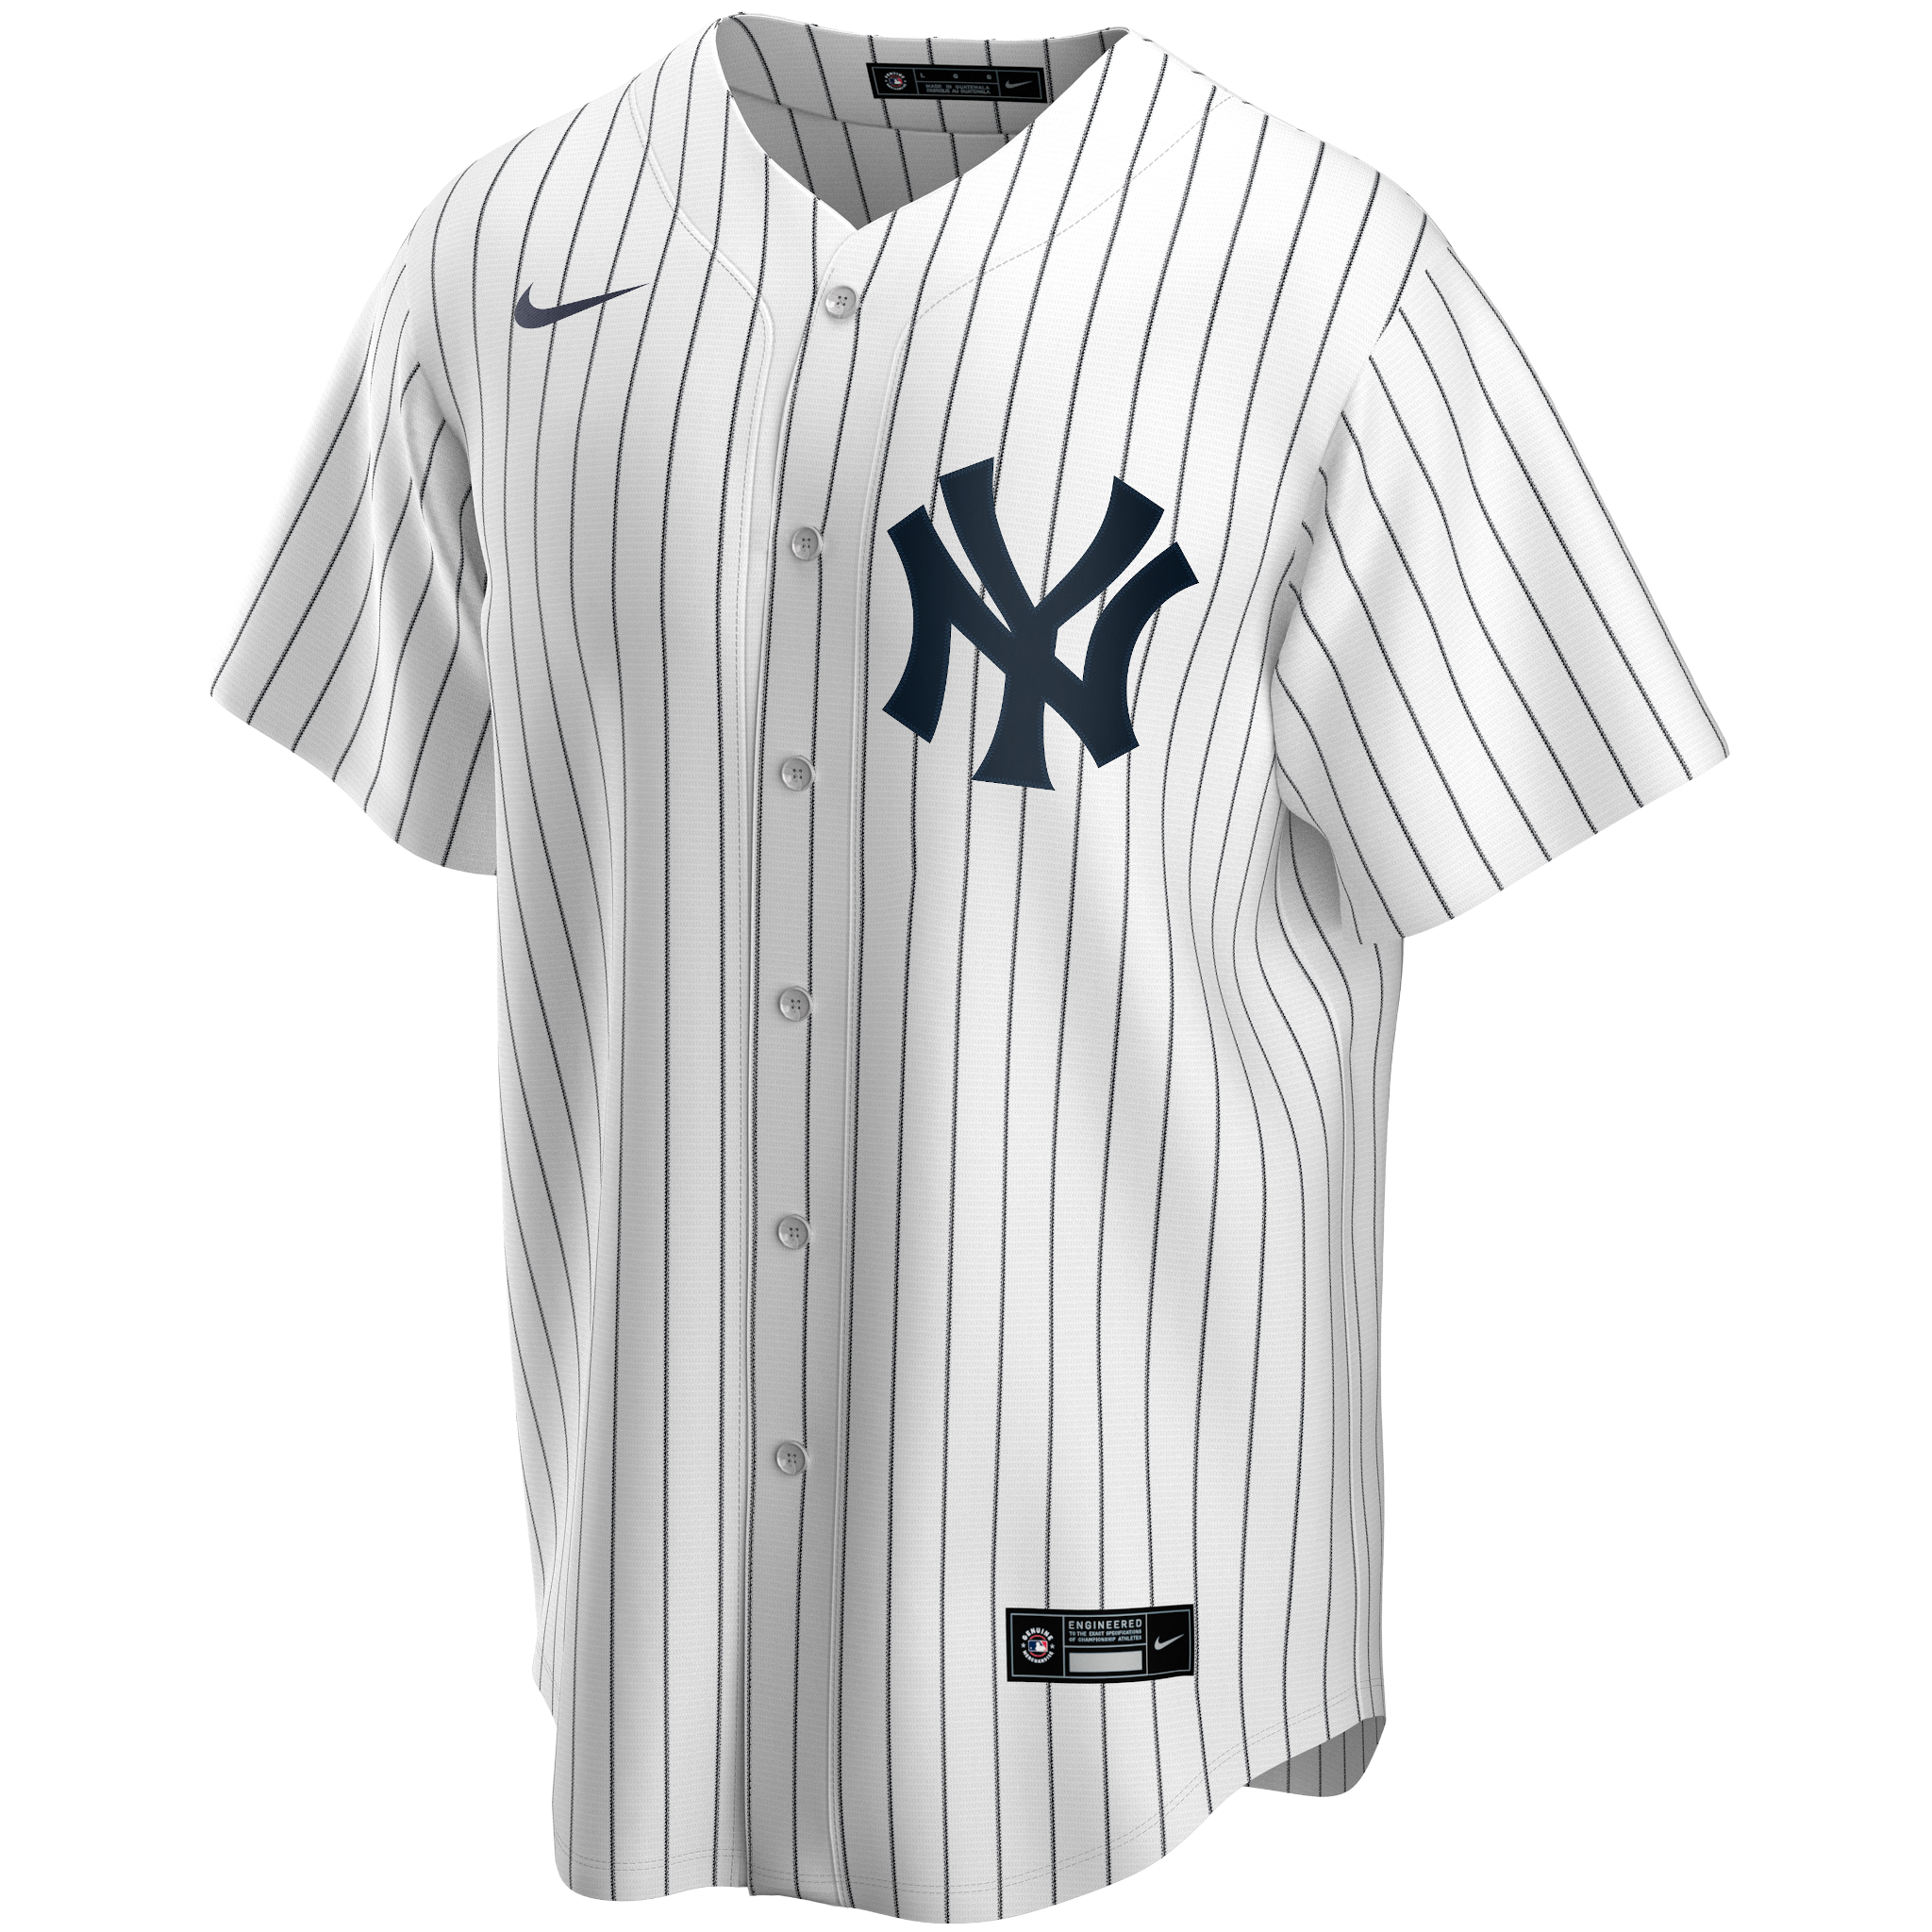 Framed CC Sabathia New York Yankees Autographed Nike Replica Jersey